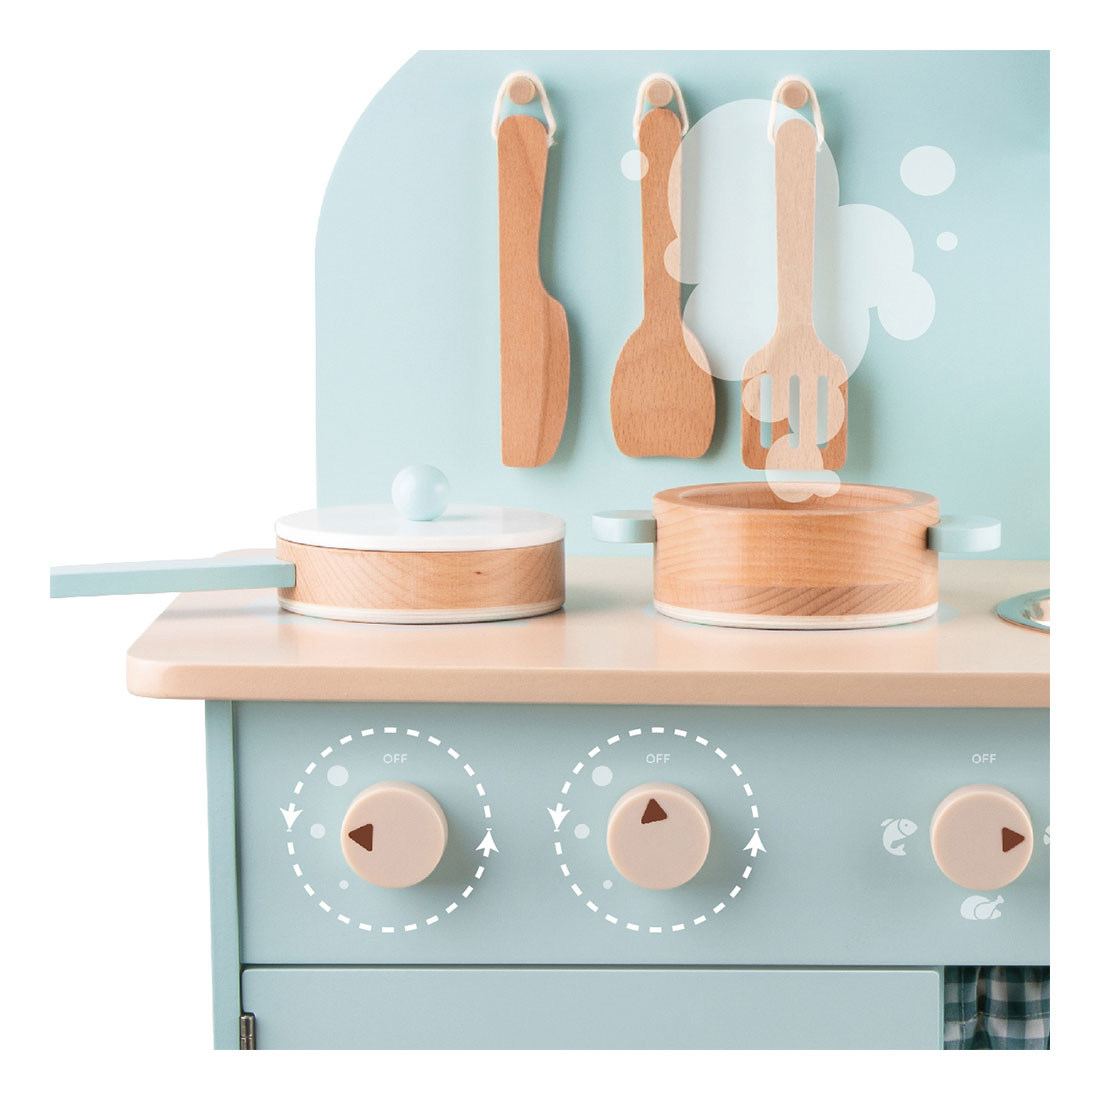 Classic World Wooden Toy Kitchen Retro Blue, 20dlg. | Thimble Toys